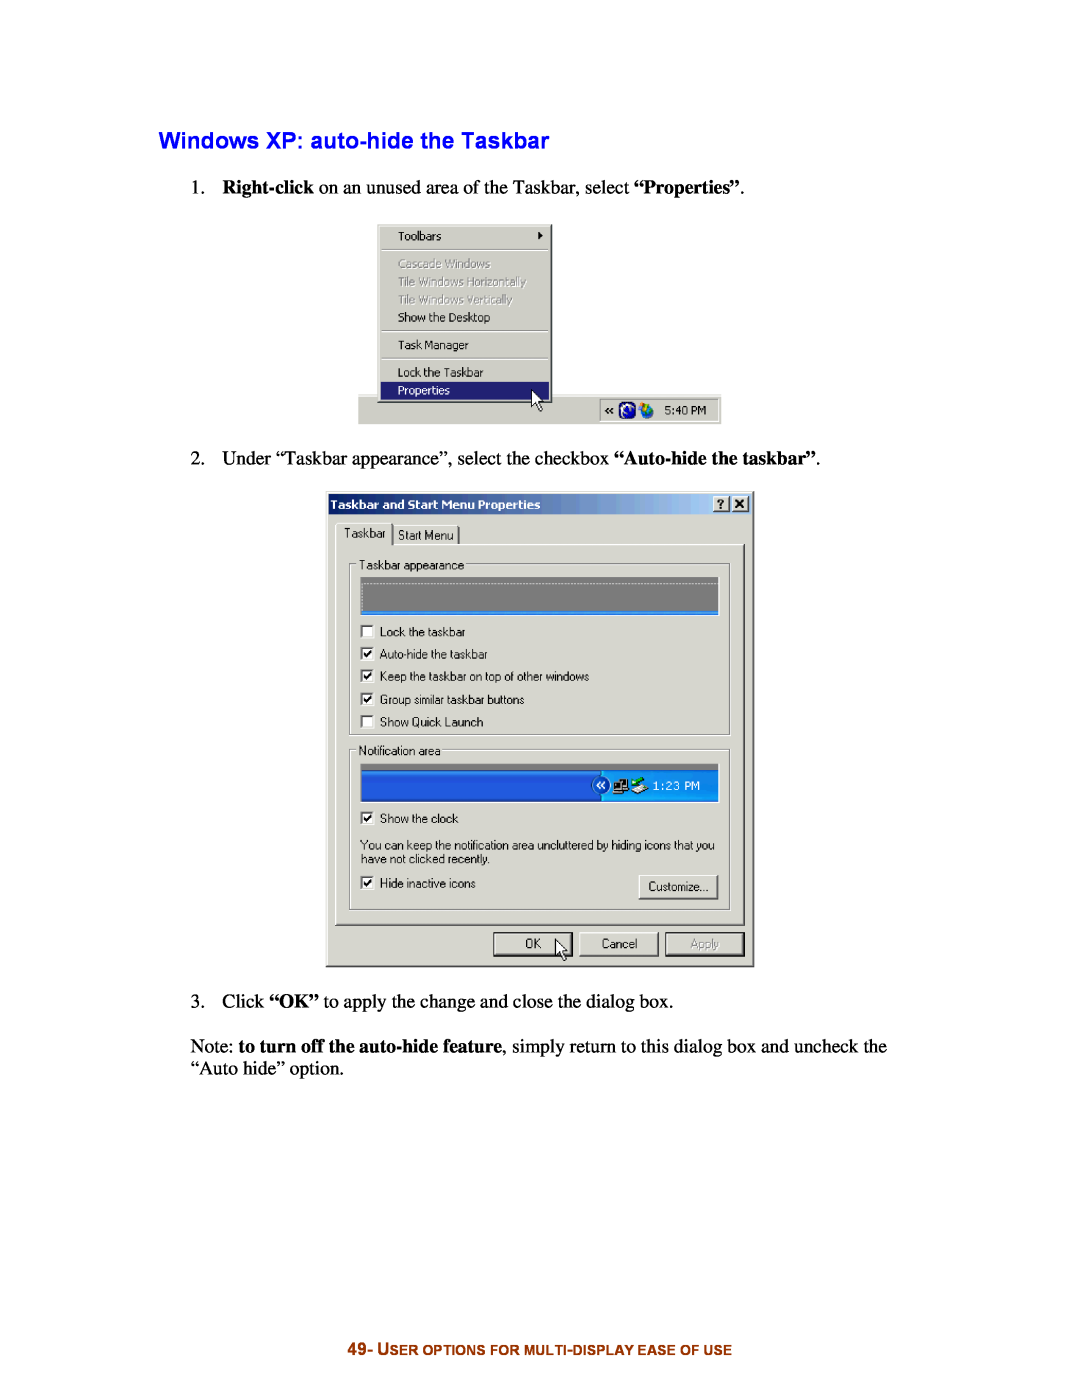 Digital Tigers SideCar MMS Series manual Windows XP auto-hide the Taskbar, User Options For Multi-Display Ease Of Use 